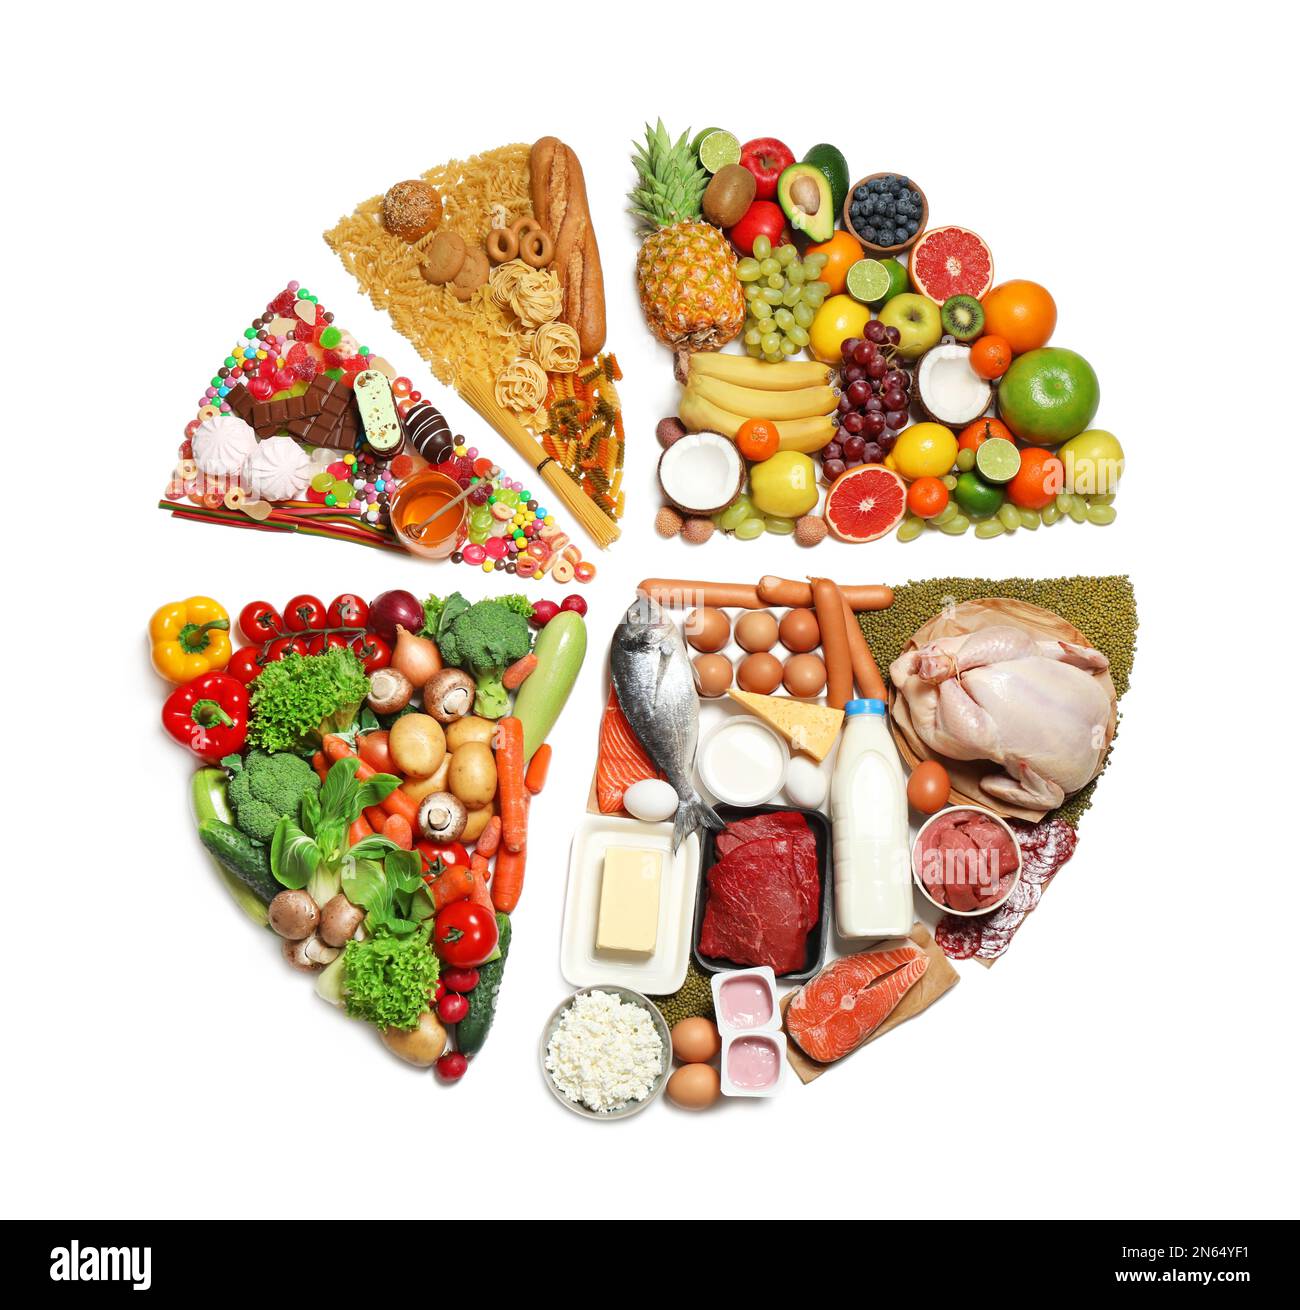 https://c8.alamy.com/comp/2N64YF1/food-pie-chart-on-white-background-top-view-healthy-balanced-diet-2N64YF1.jpg